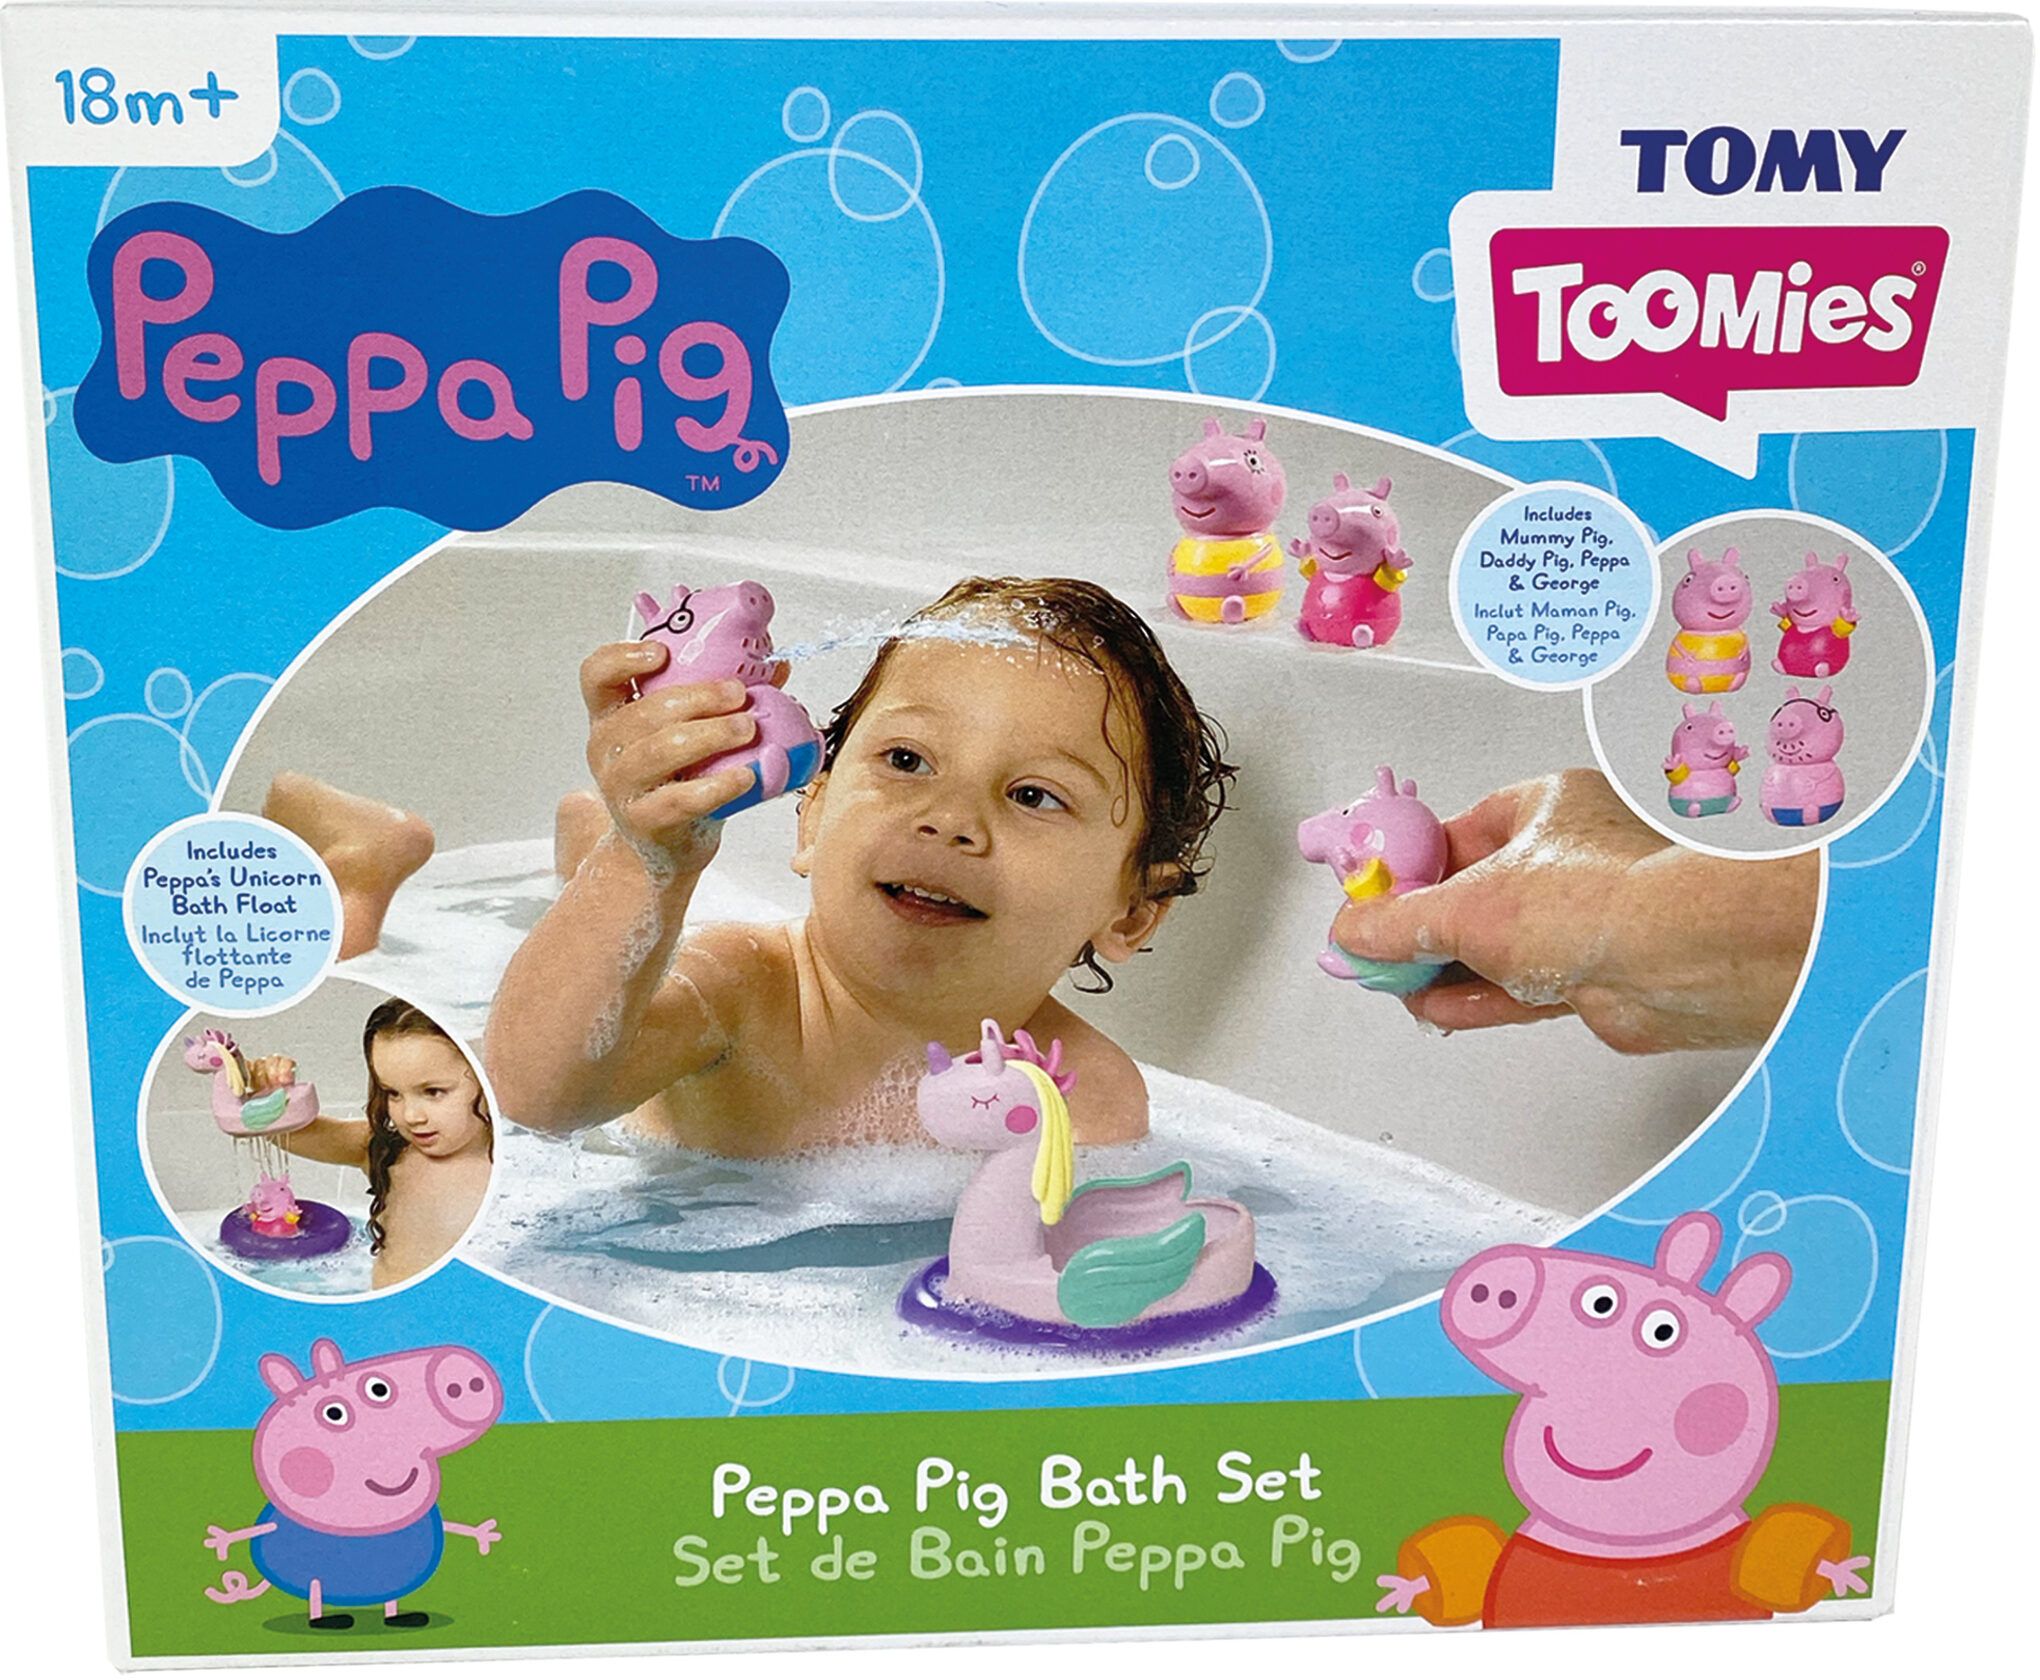 An image of Toomies Peppa Pig Bath Set